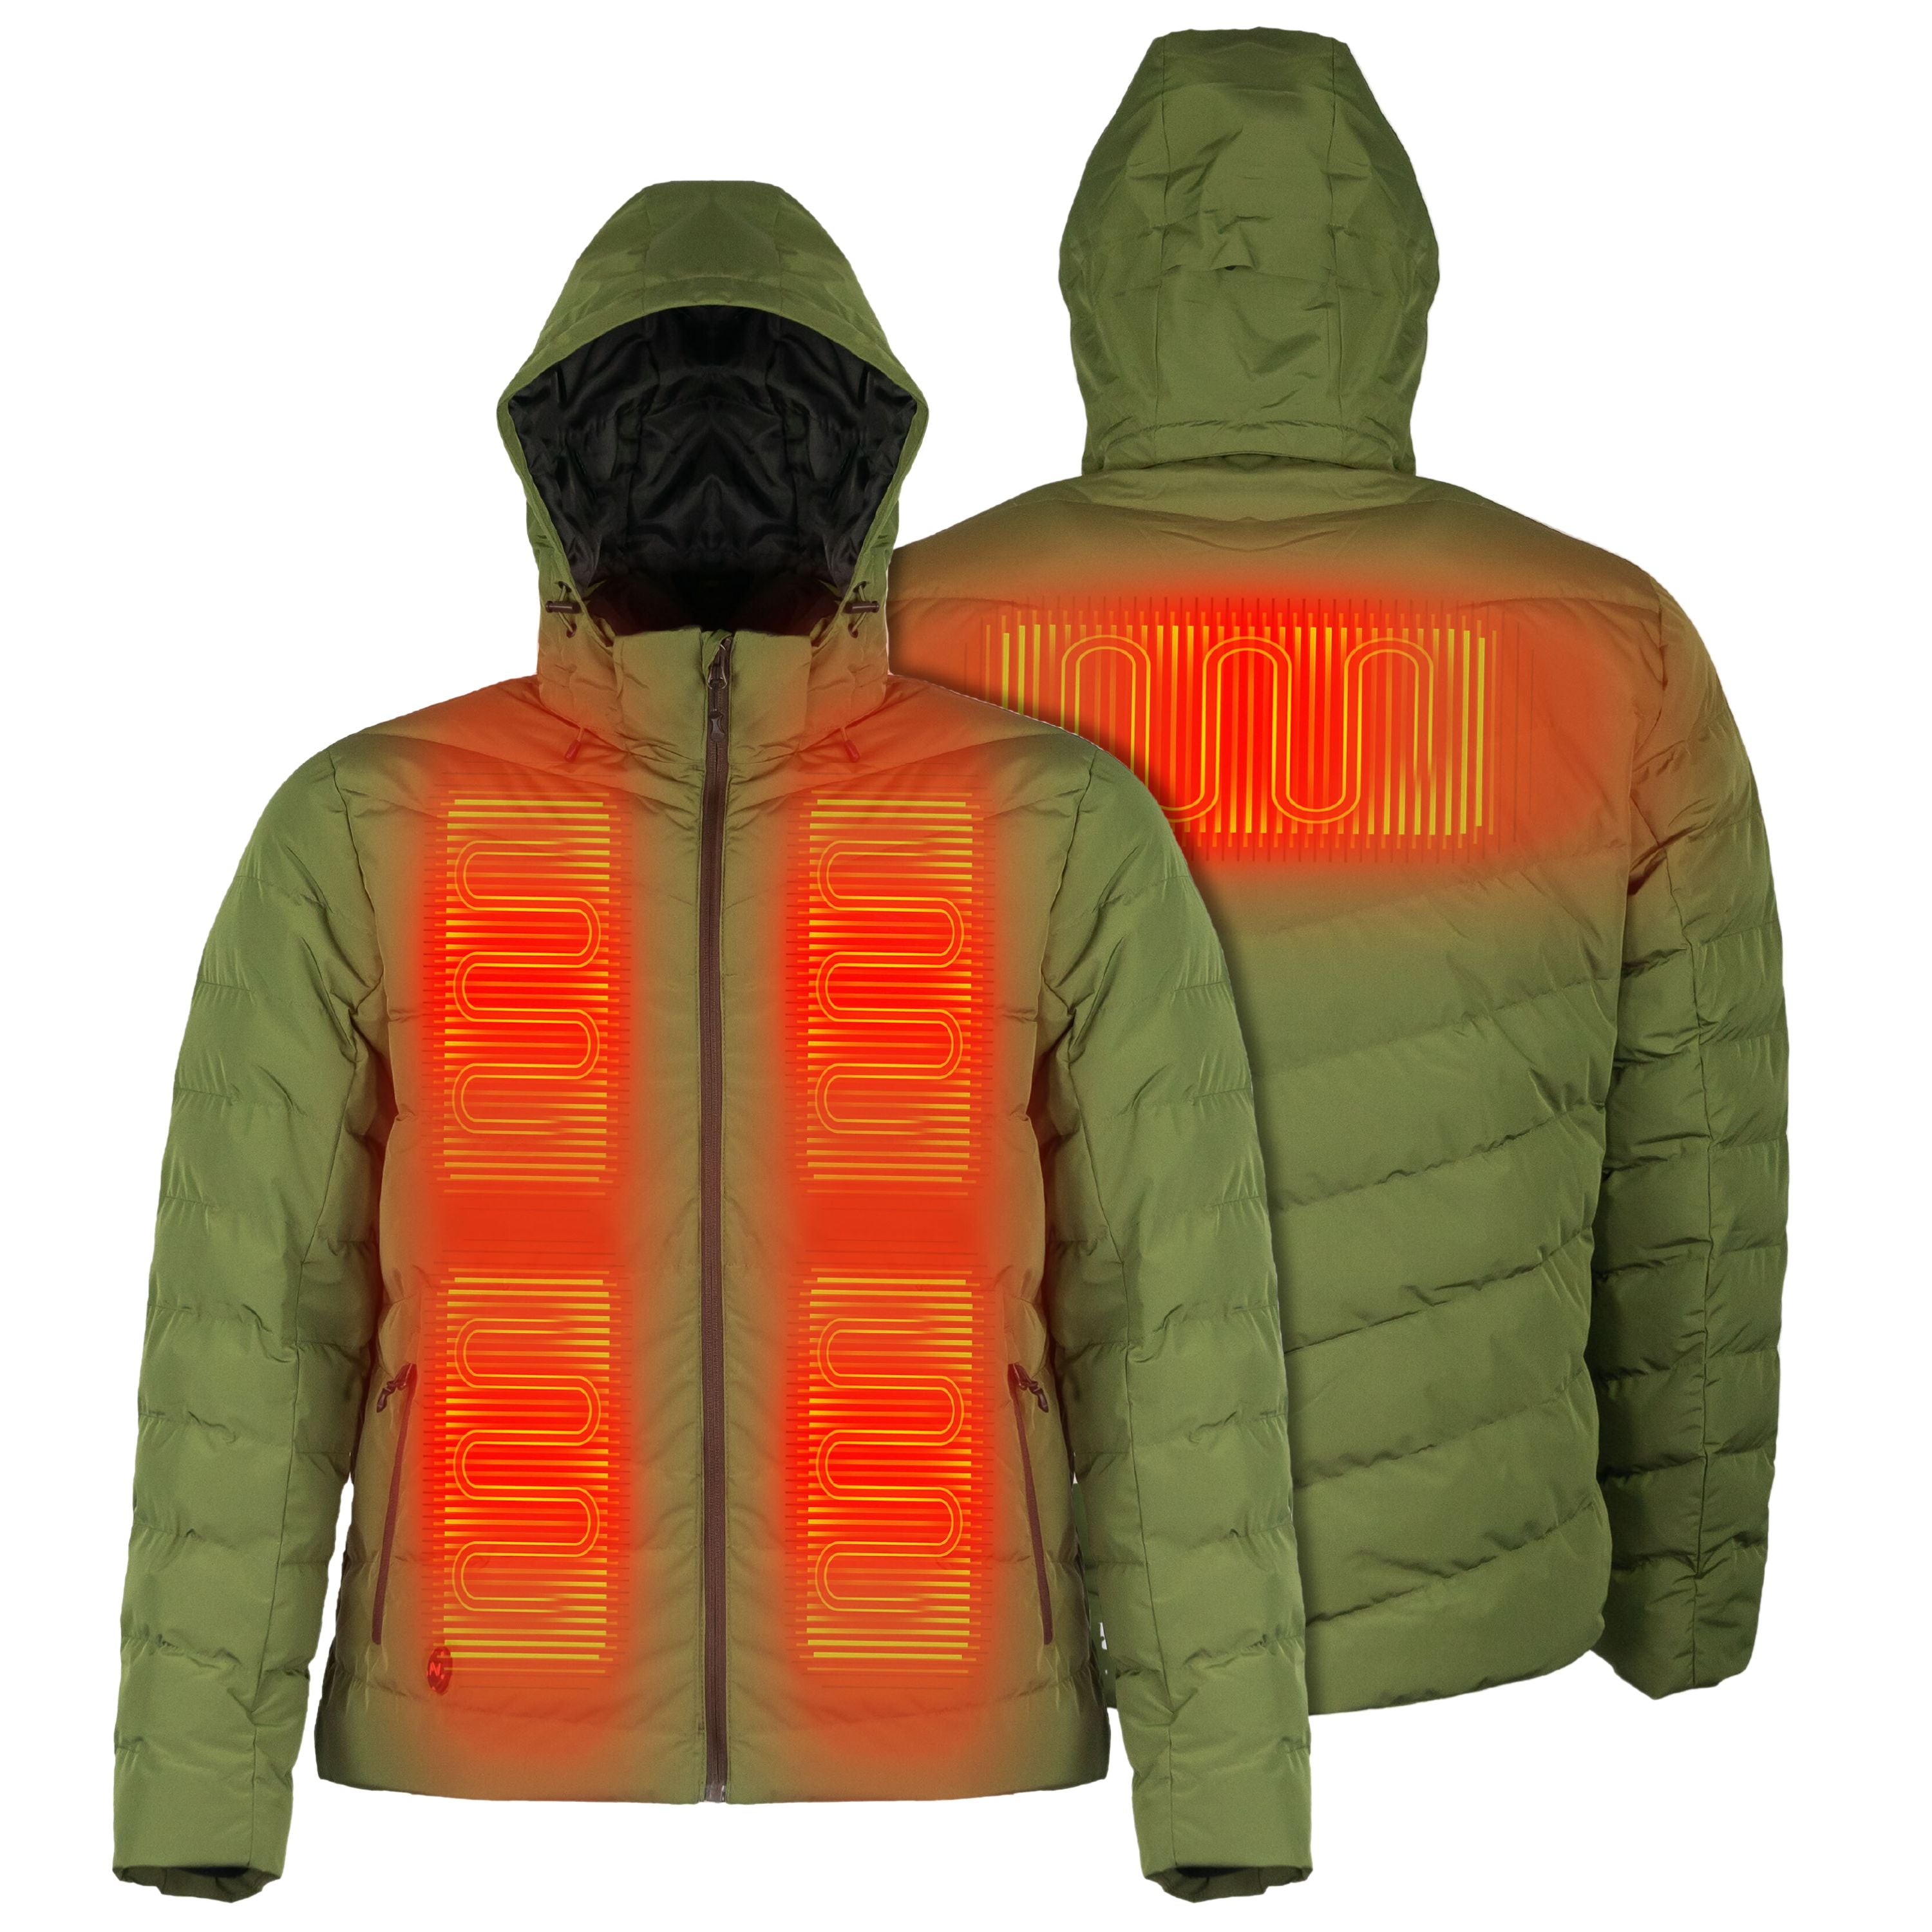 "Crest" Heated jacket - Men's